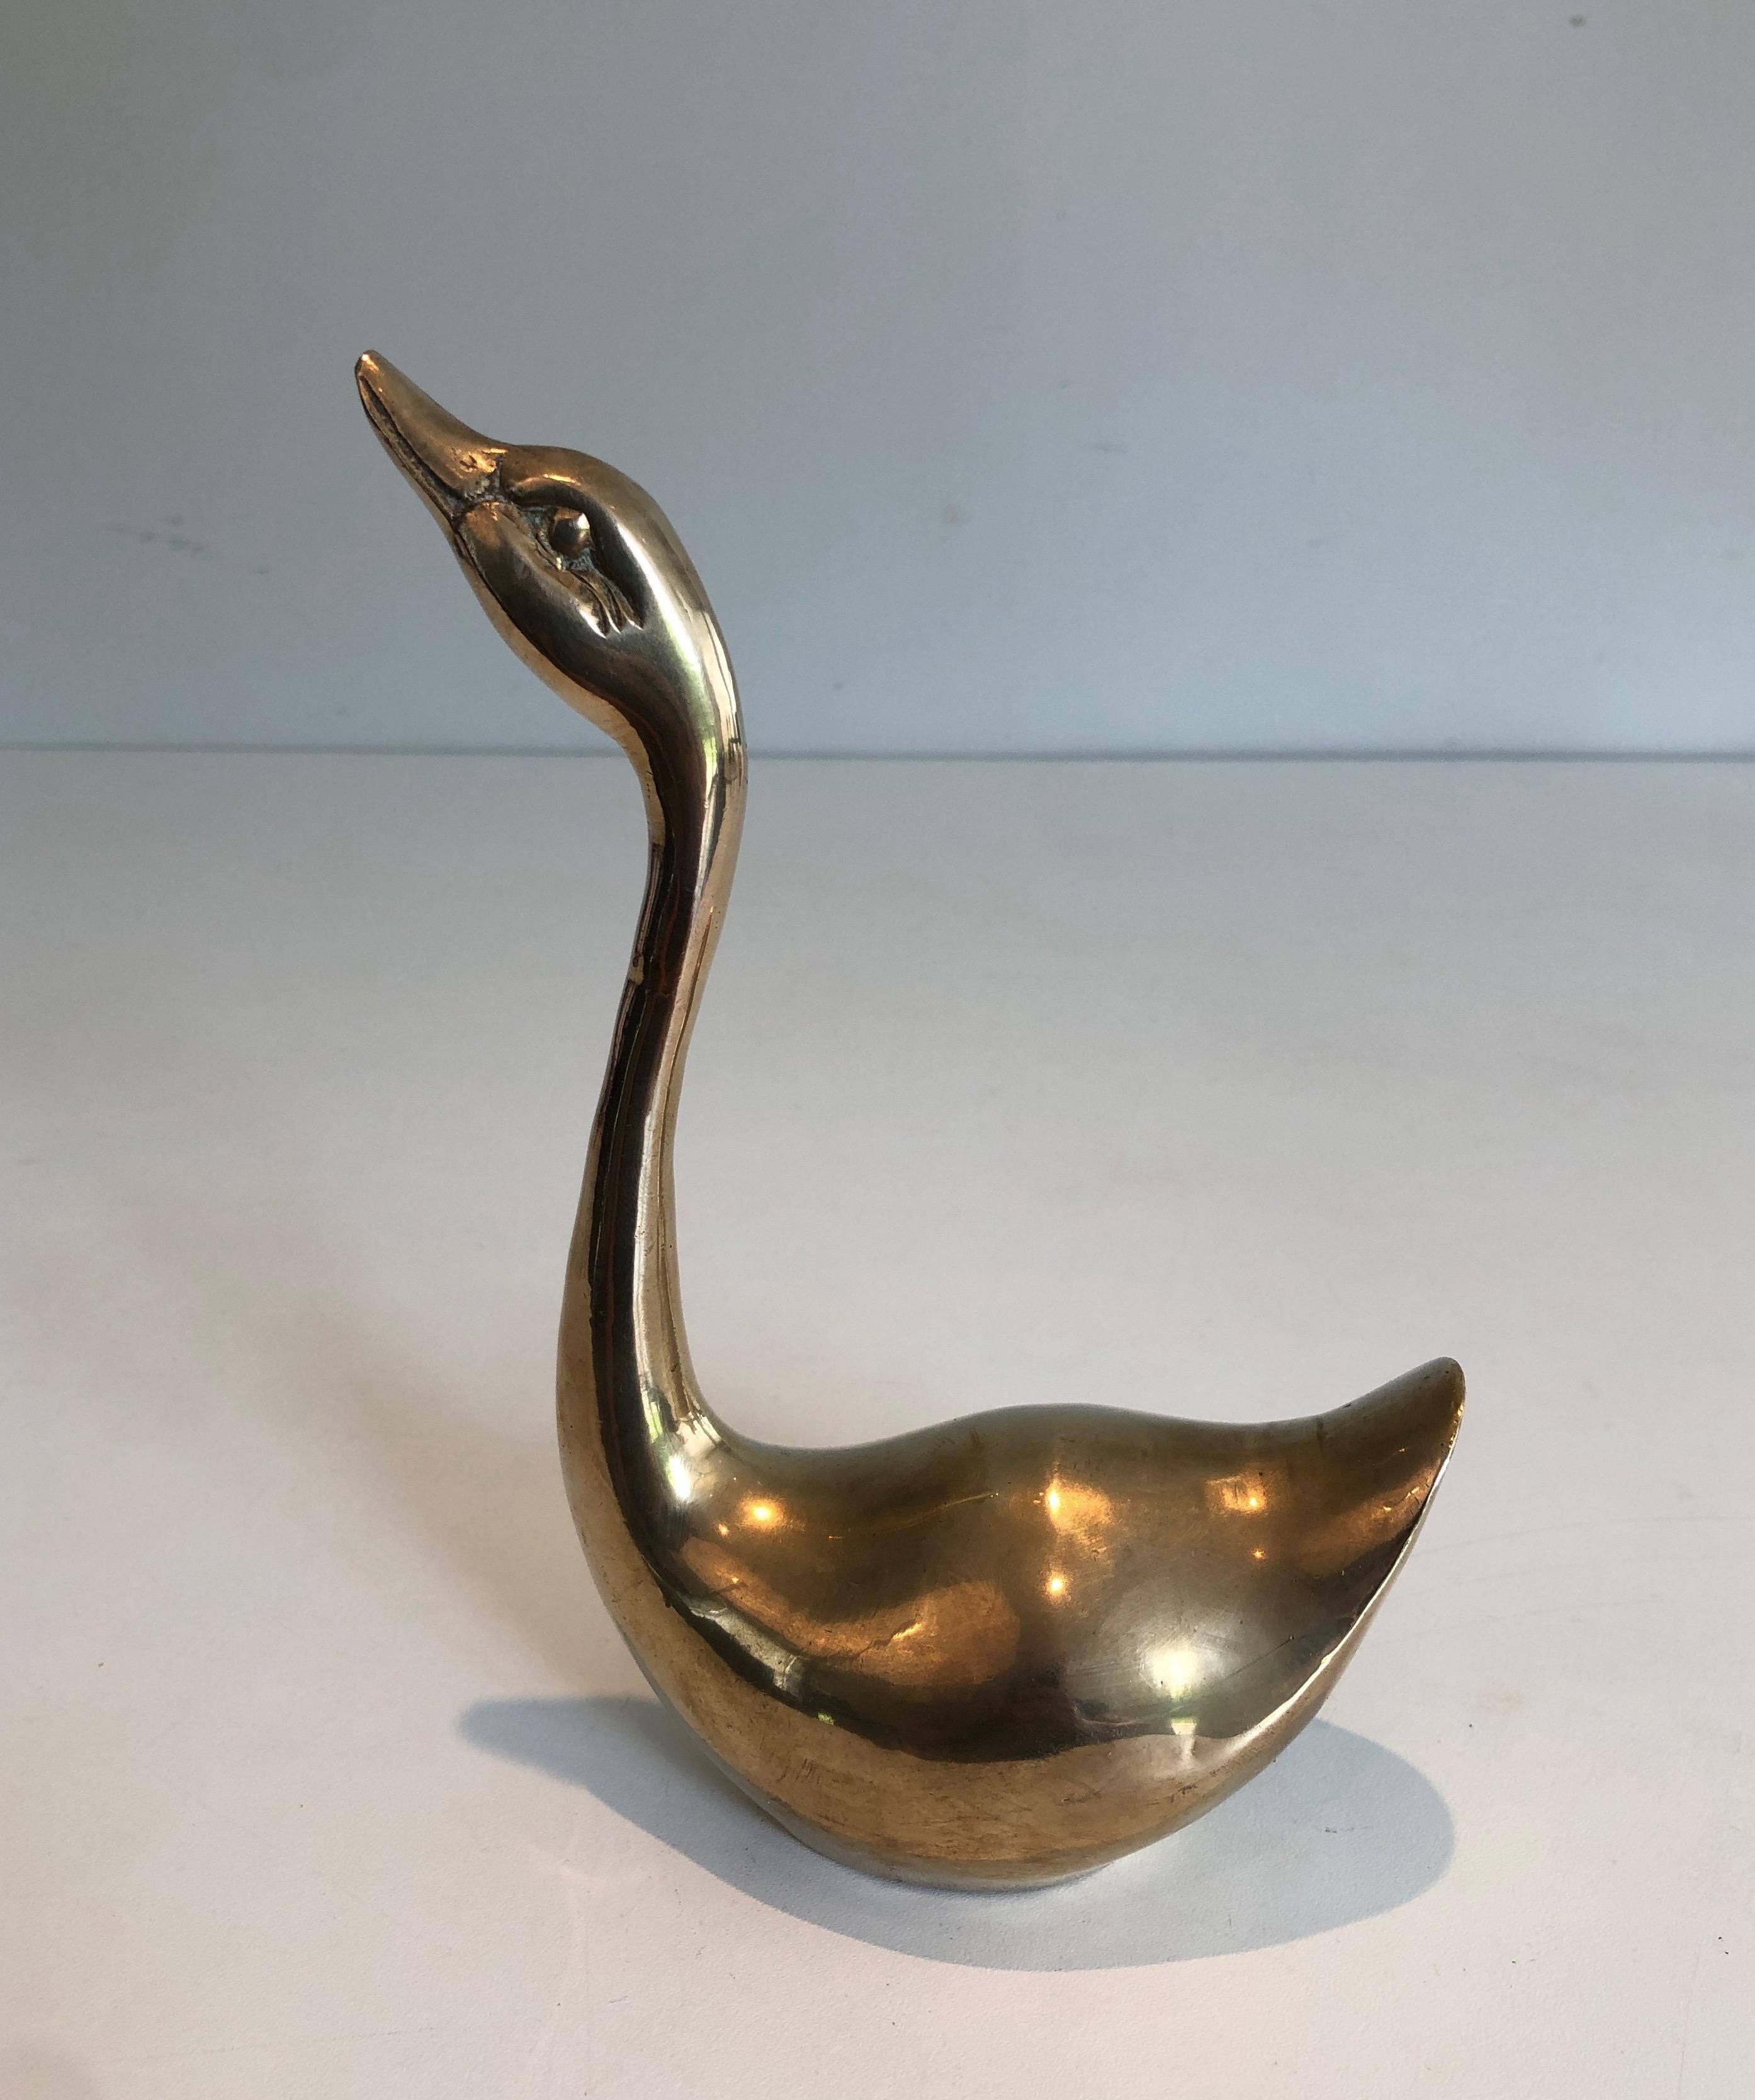 brass ducks for sale